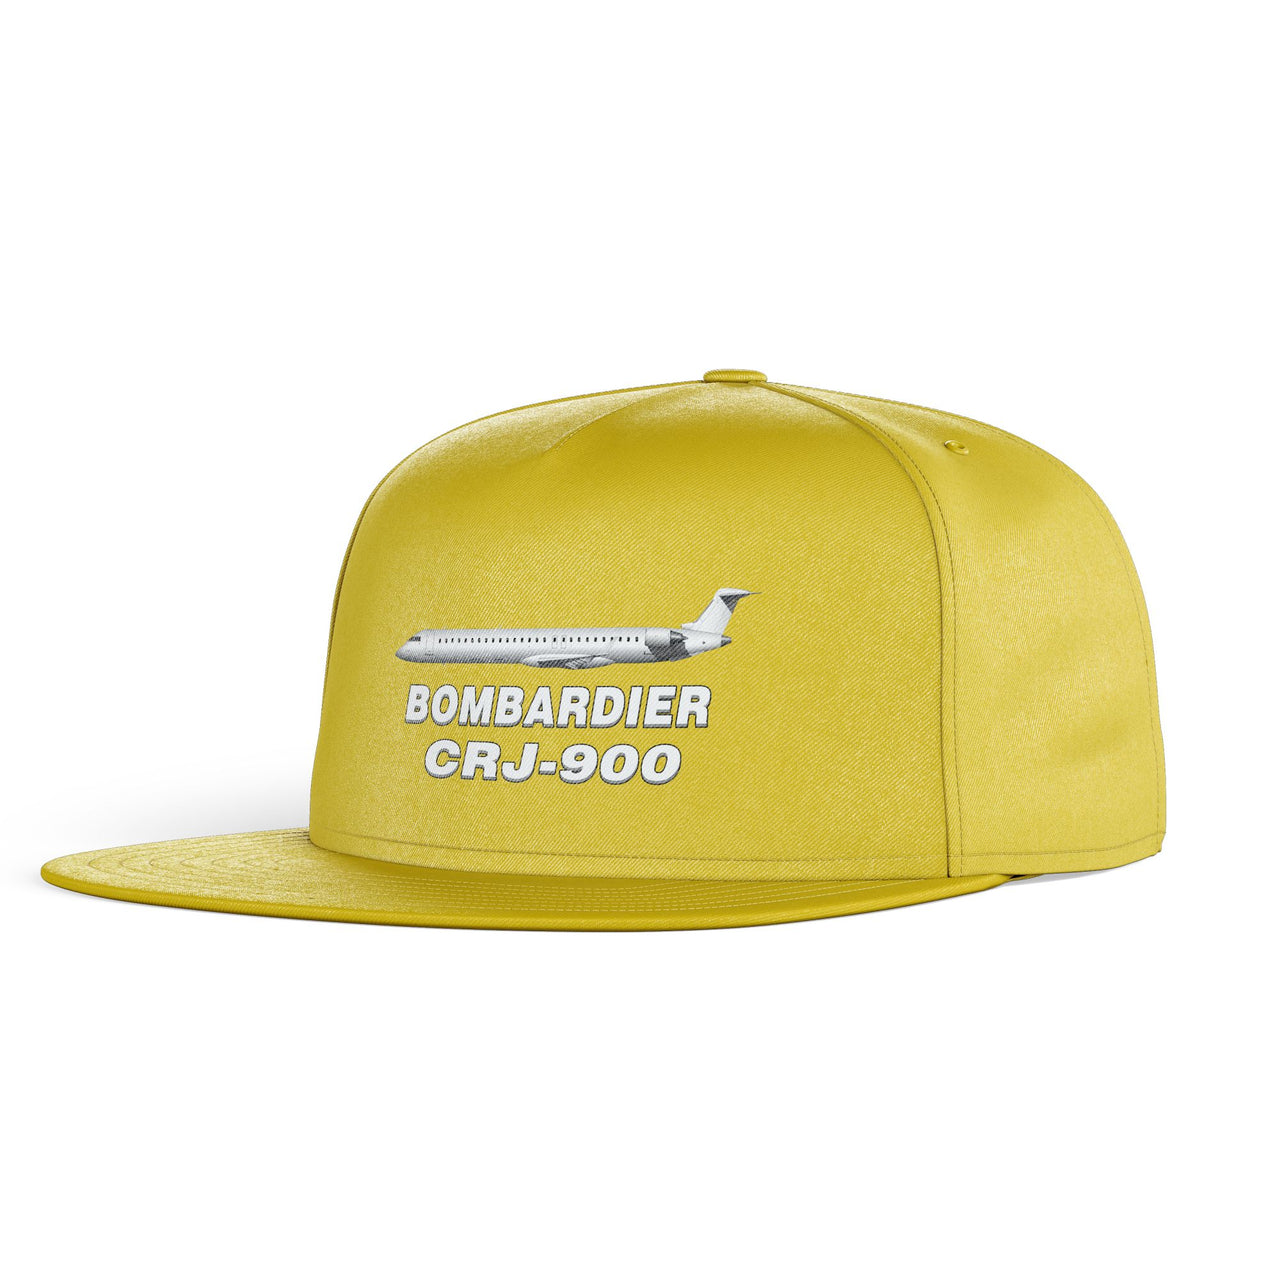 Bombardier CRJ-900 Designed Snapback Caps & Hats